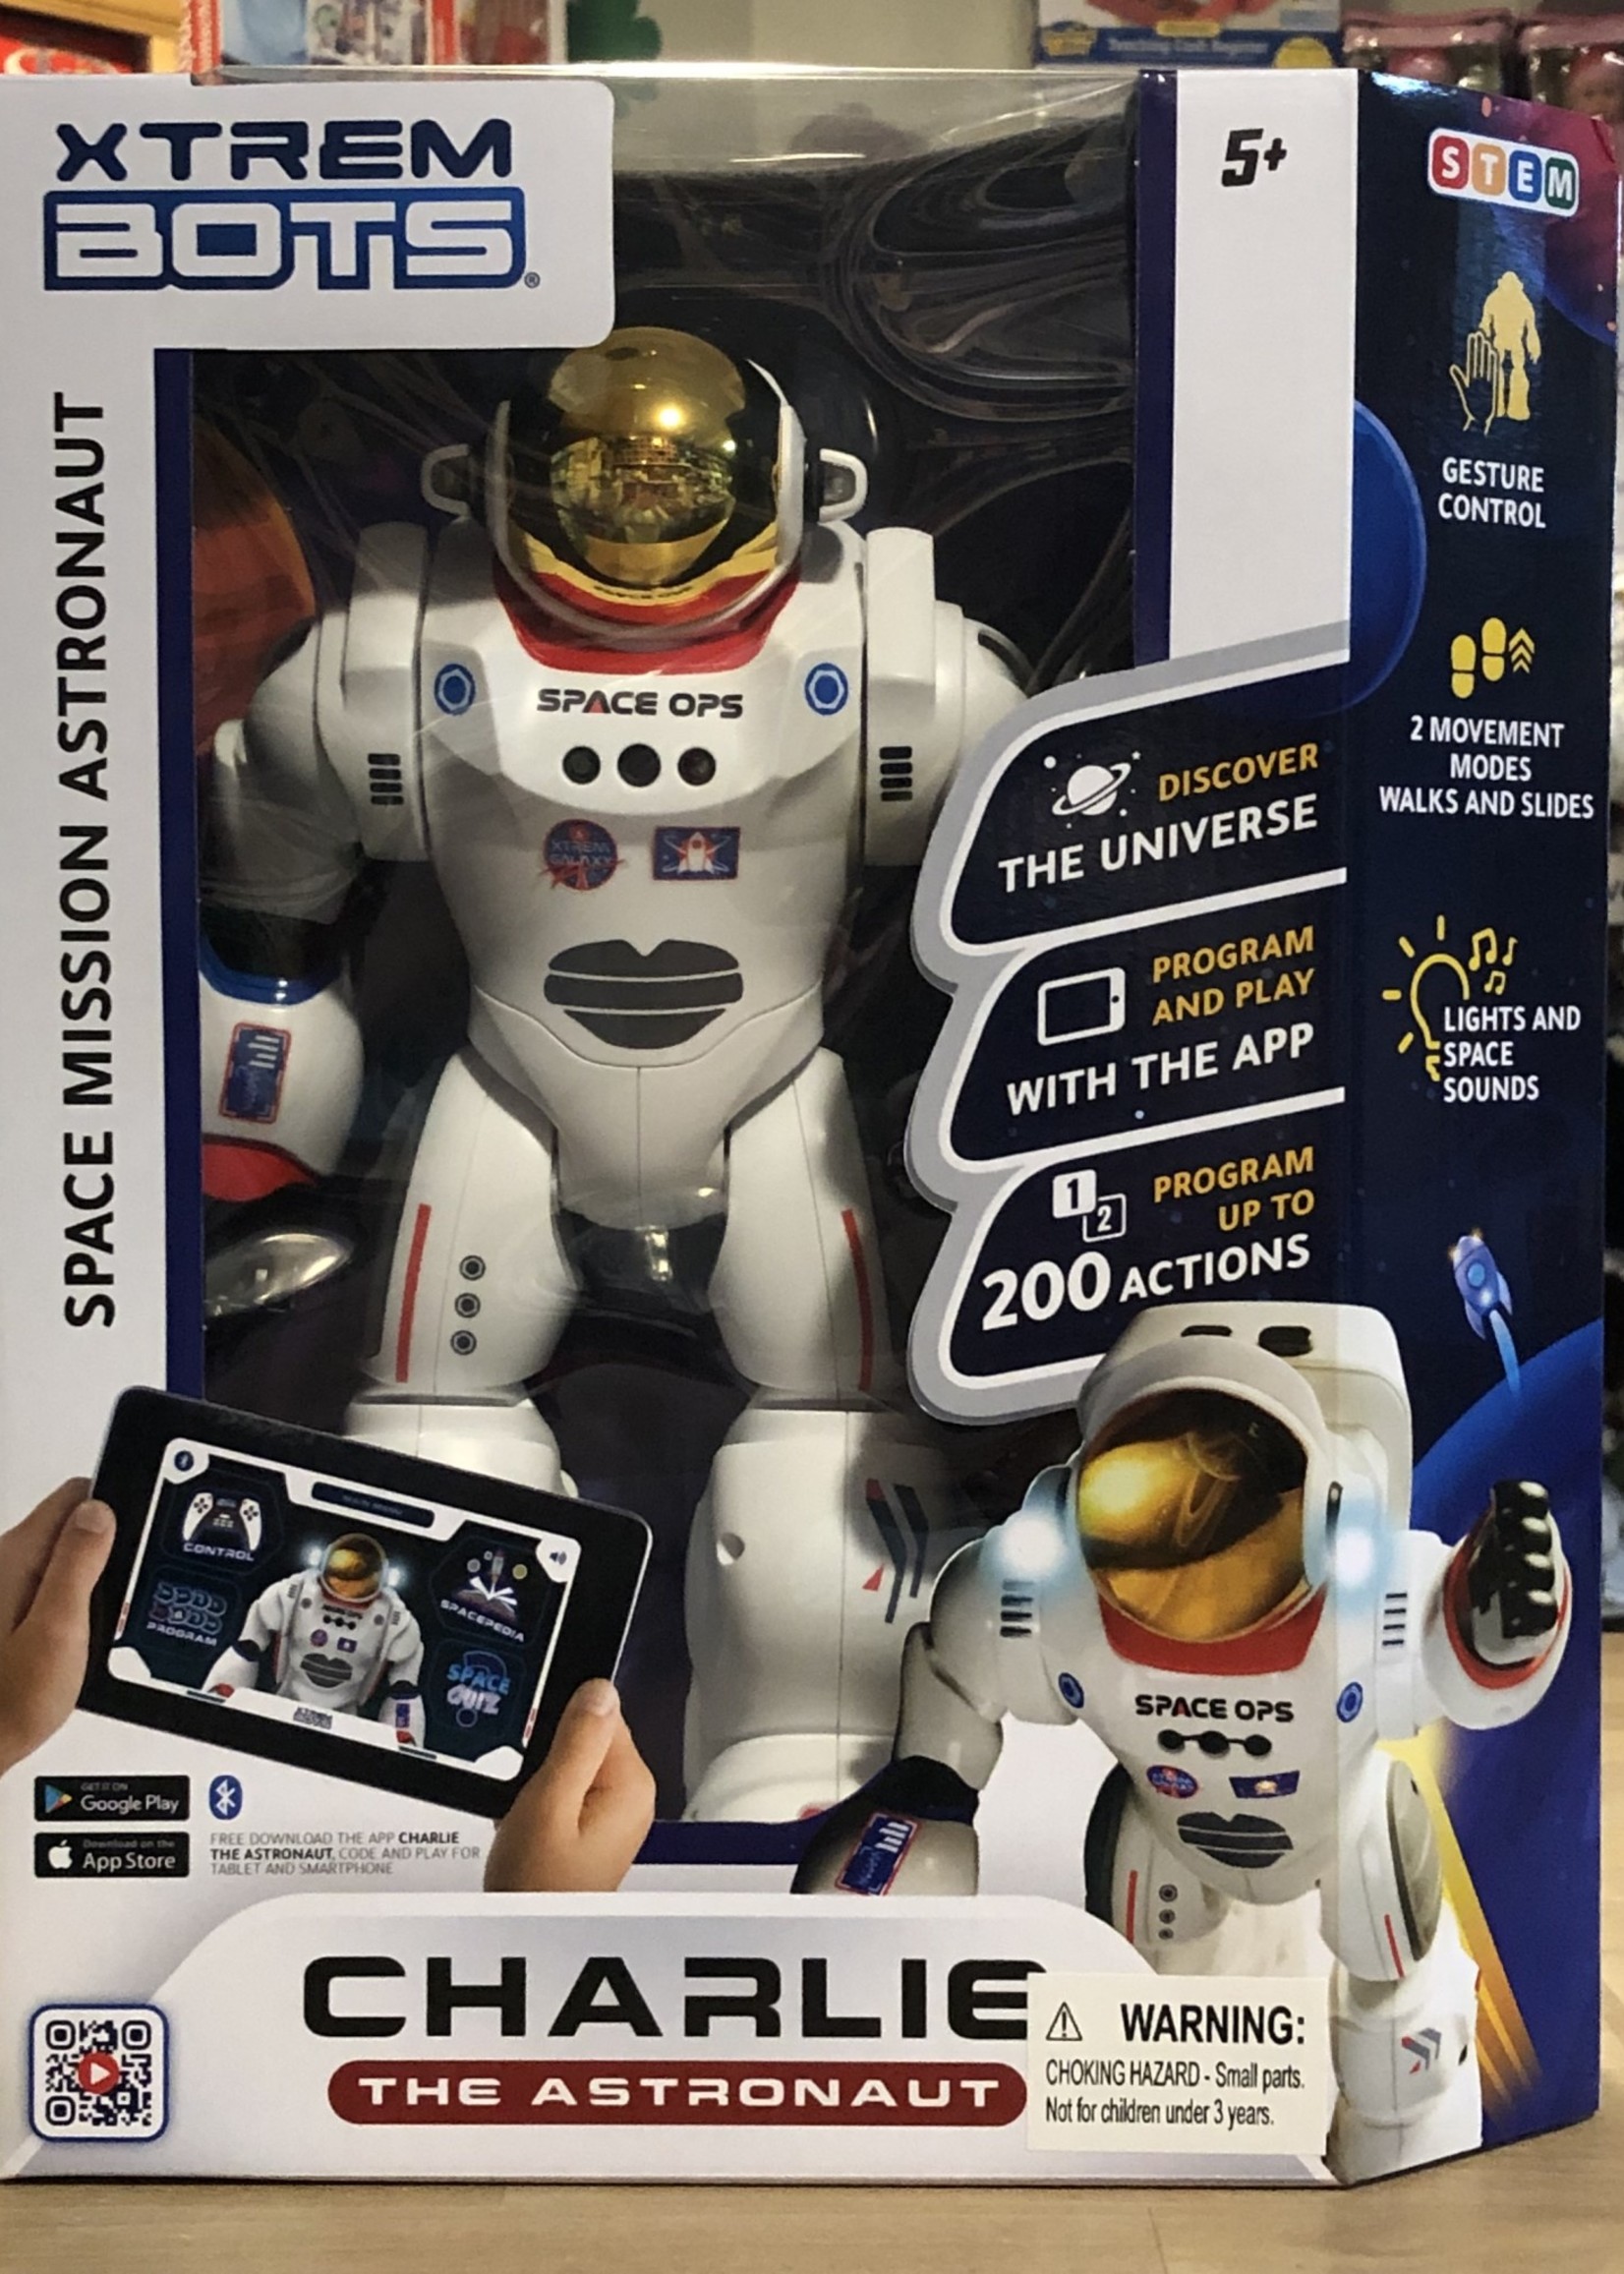 Xtrem Bots - Charlie the Astronaut